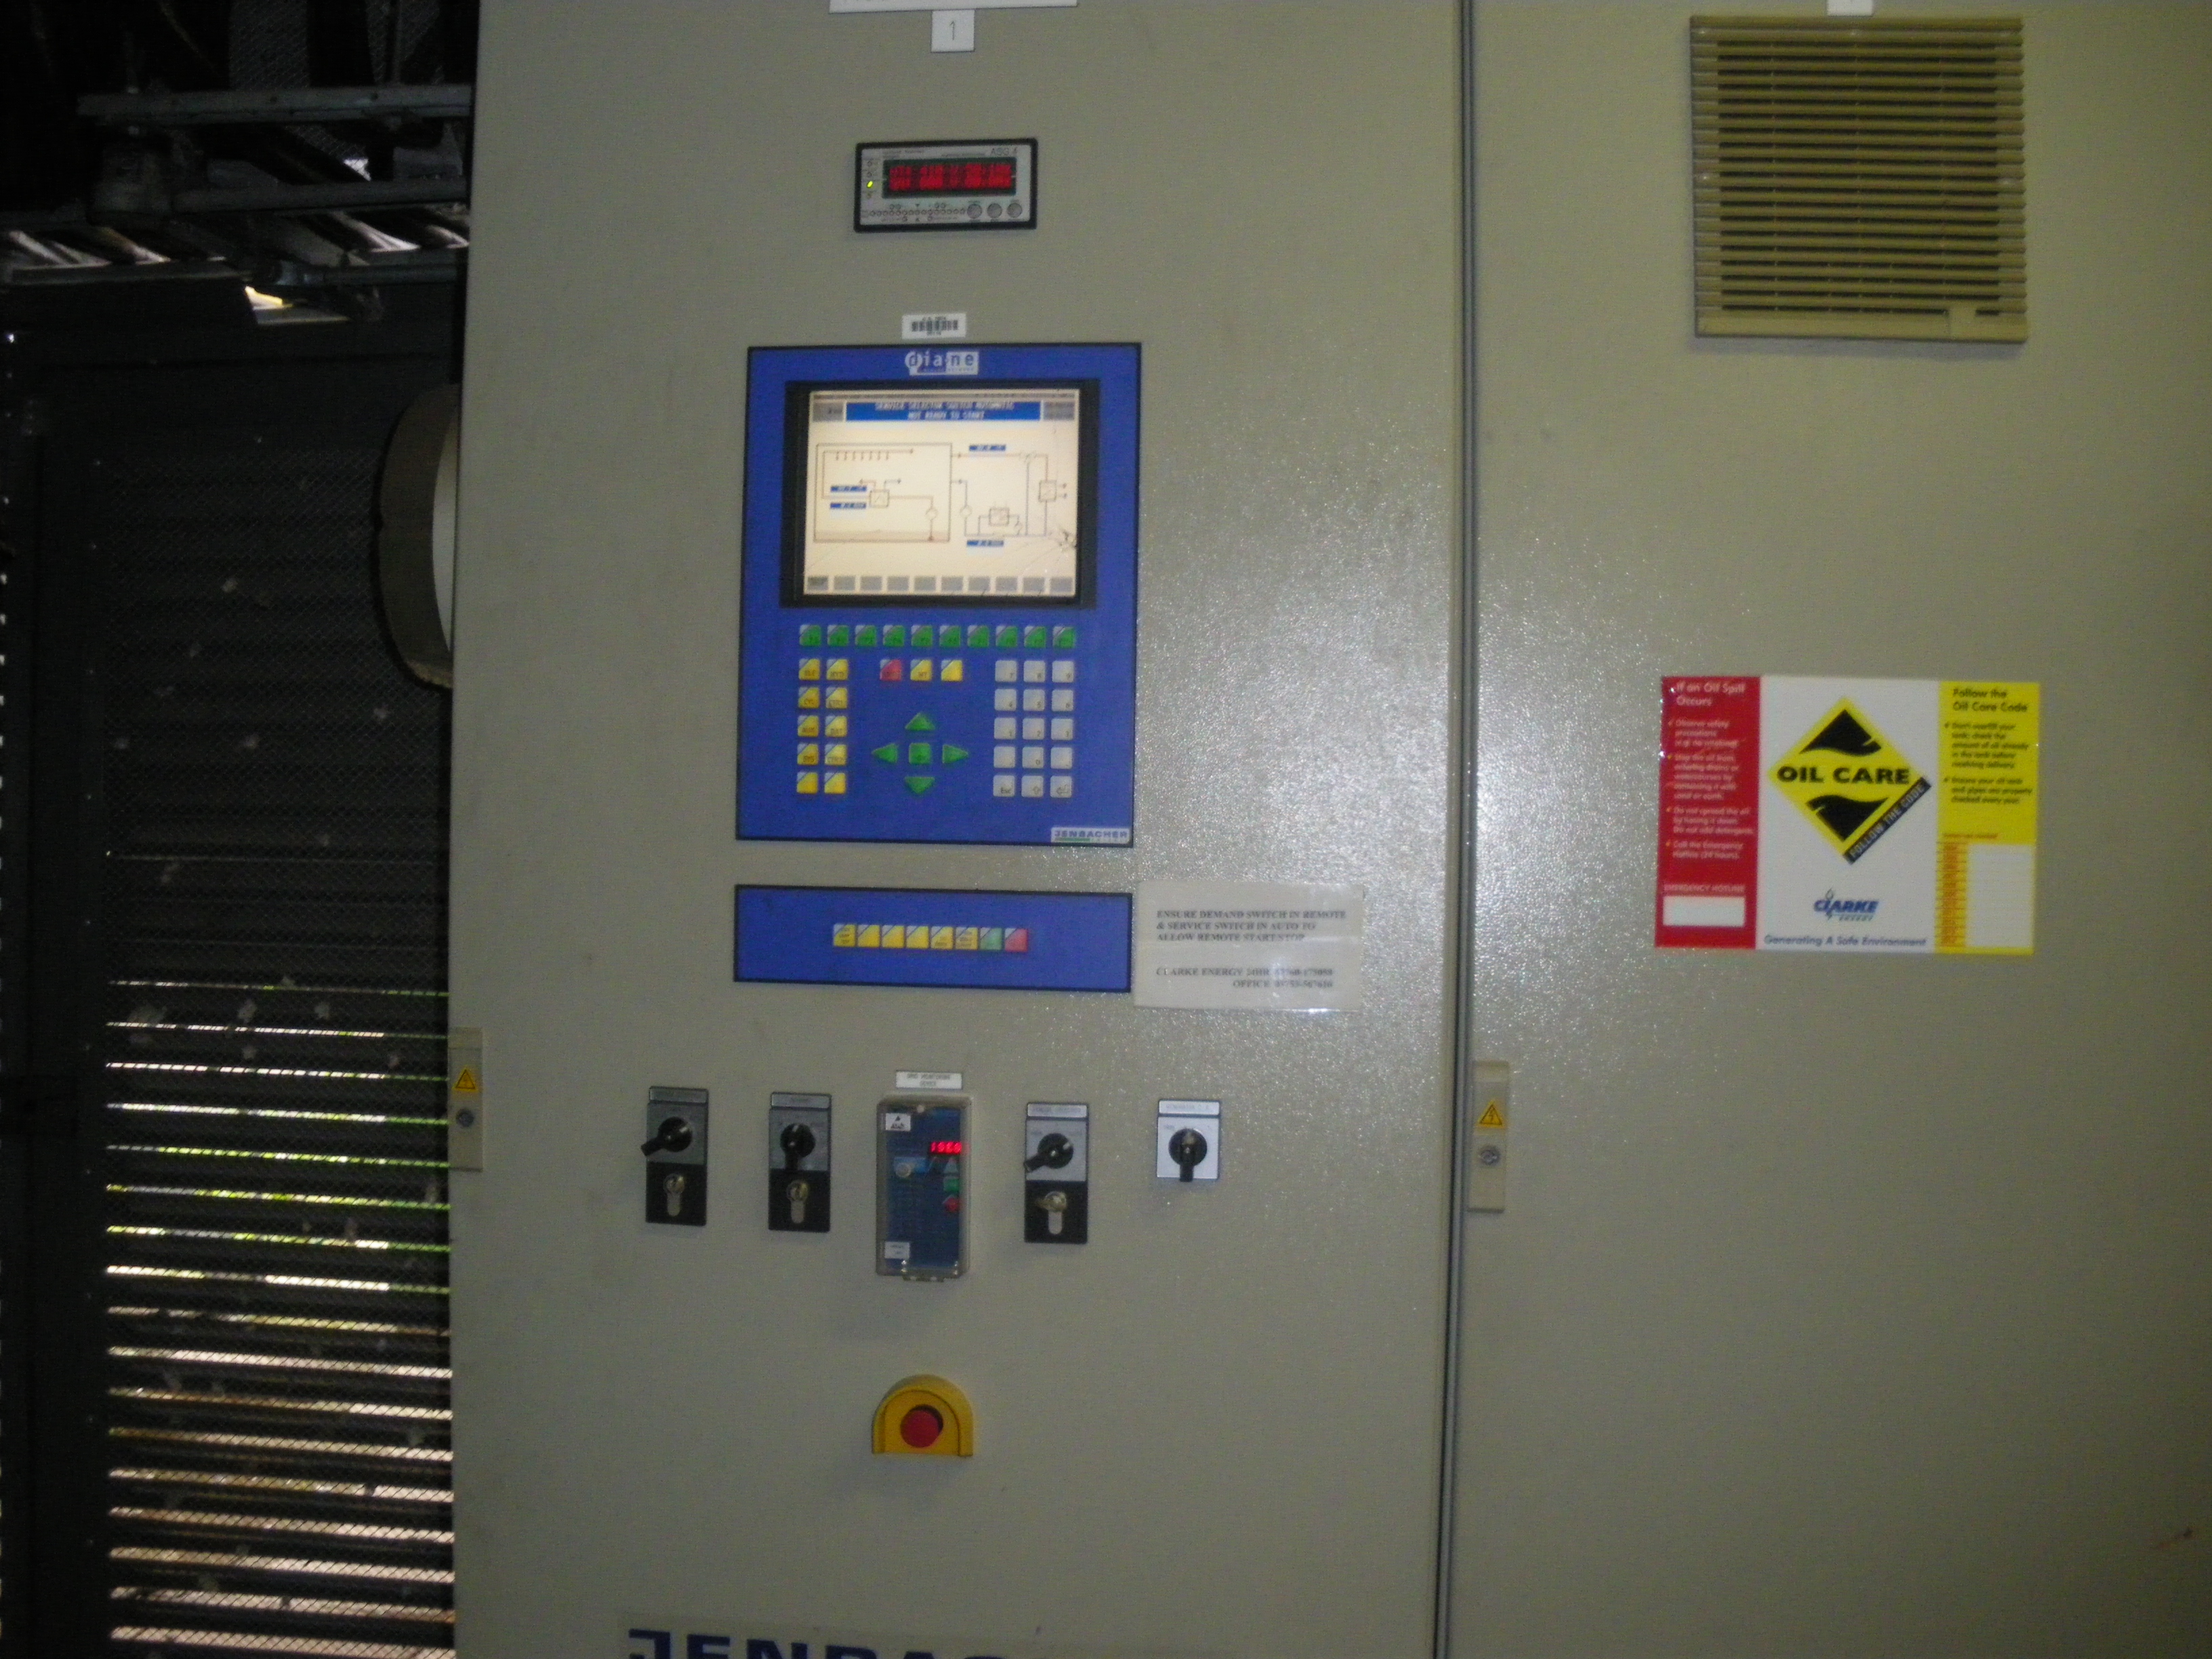 CHP control panel